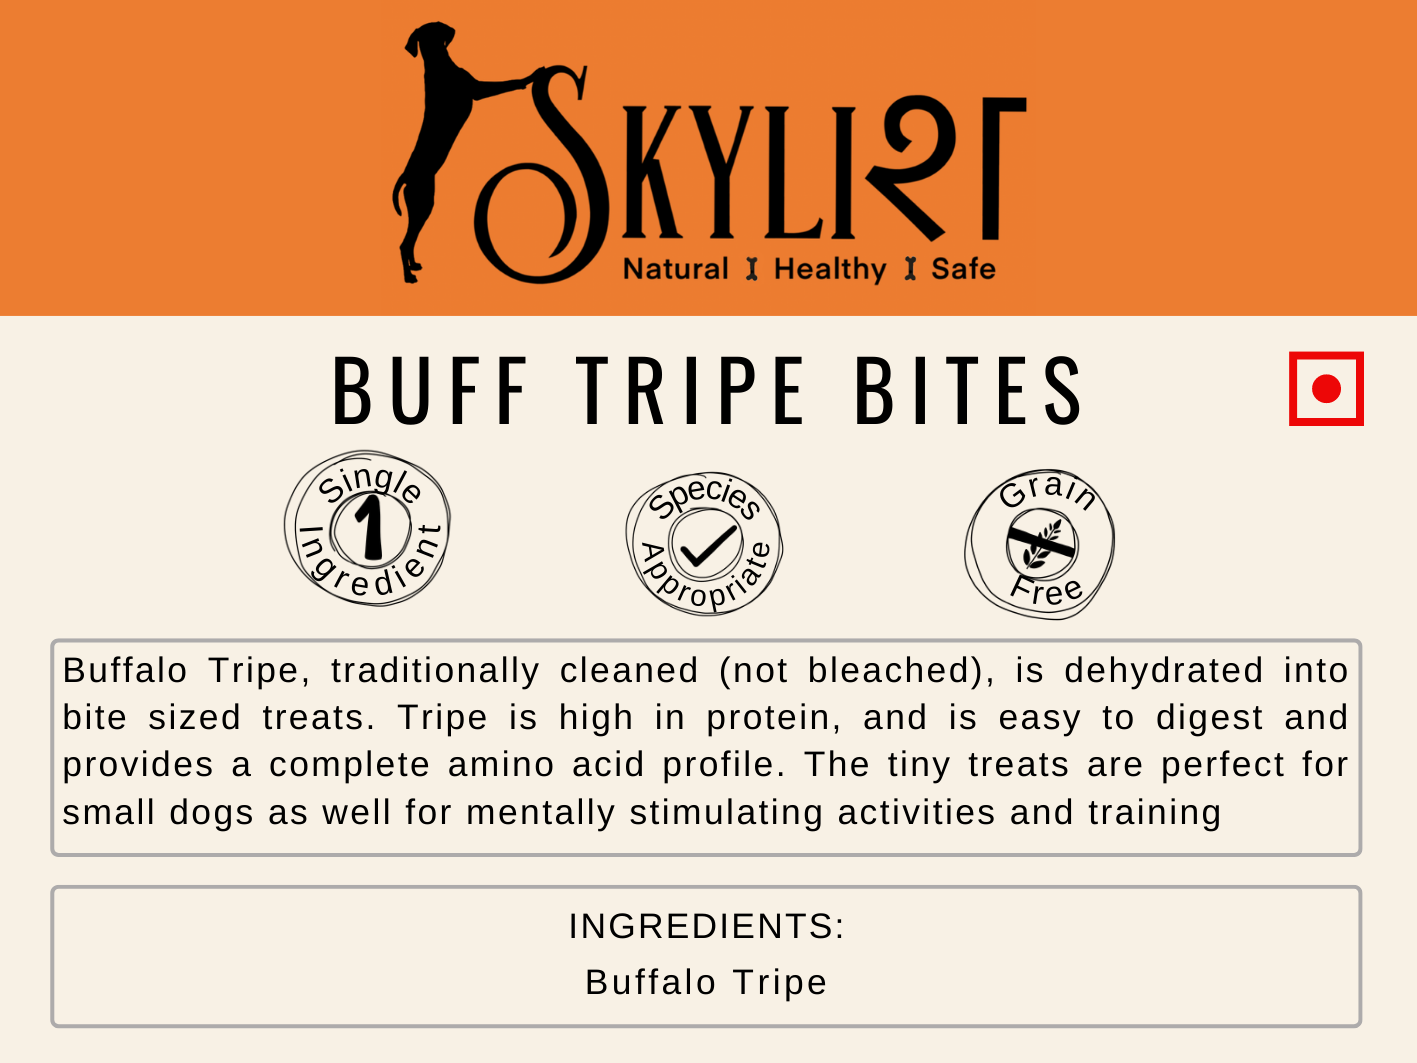 Buff Tripe Bites